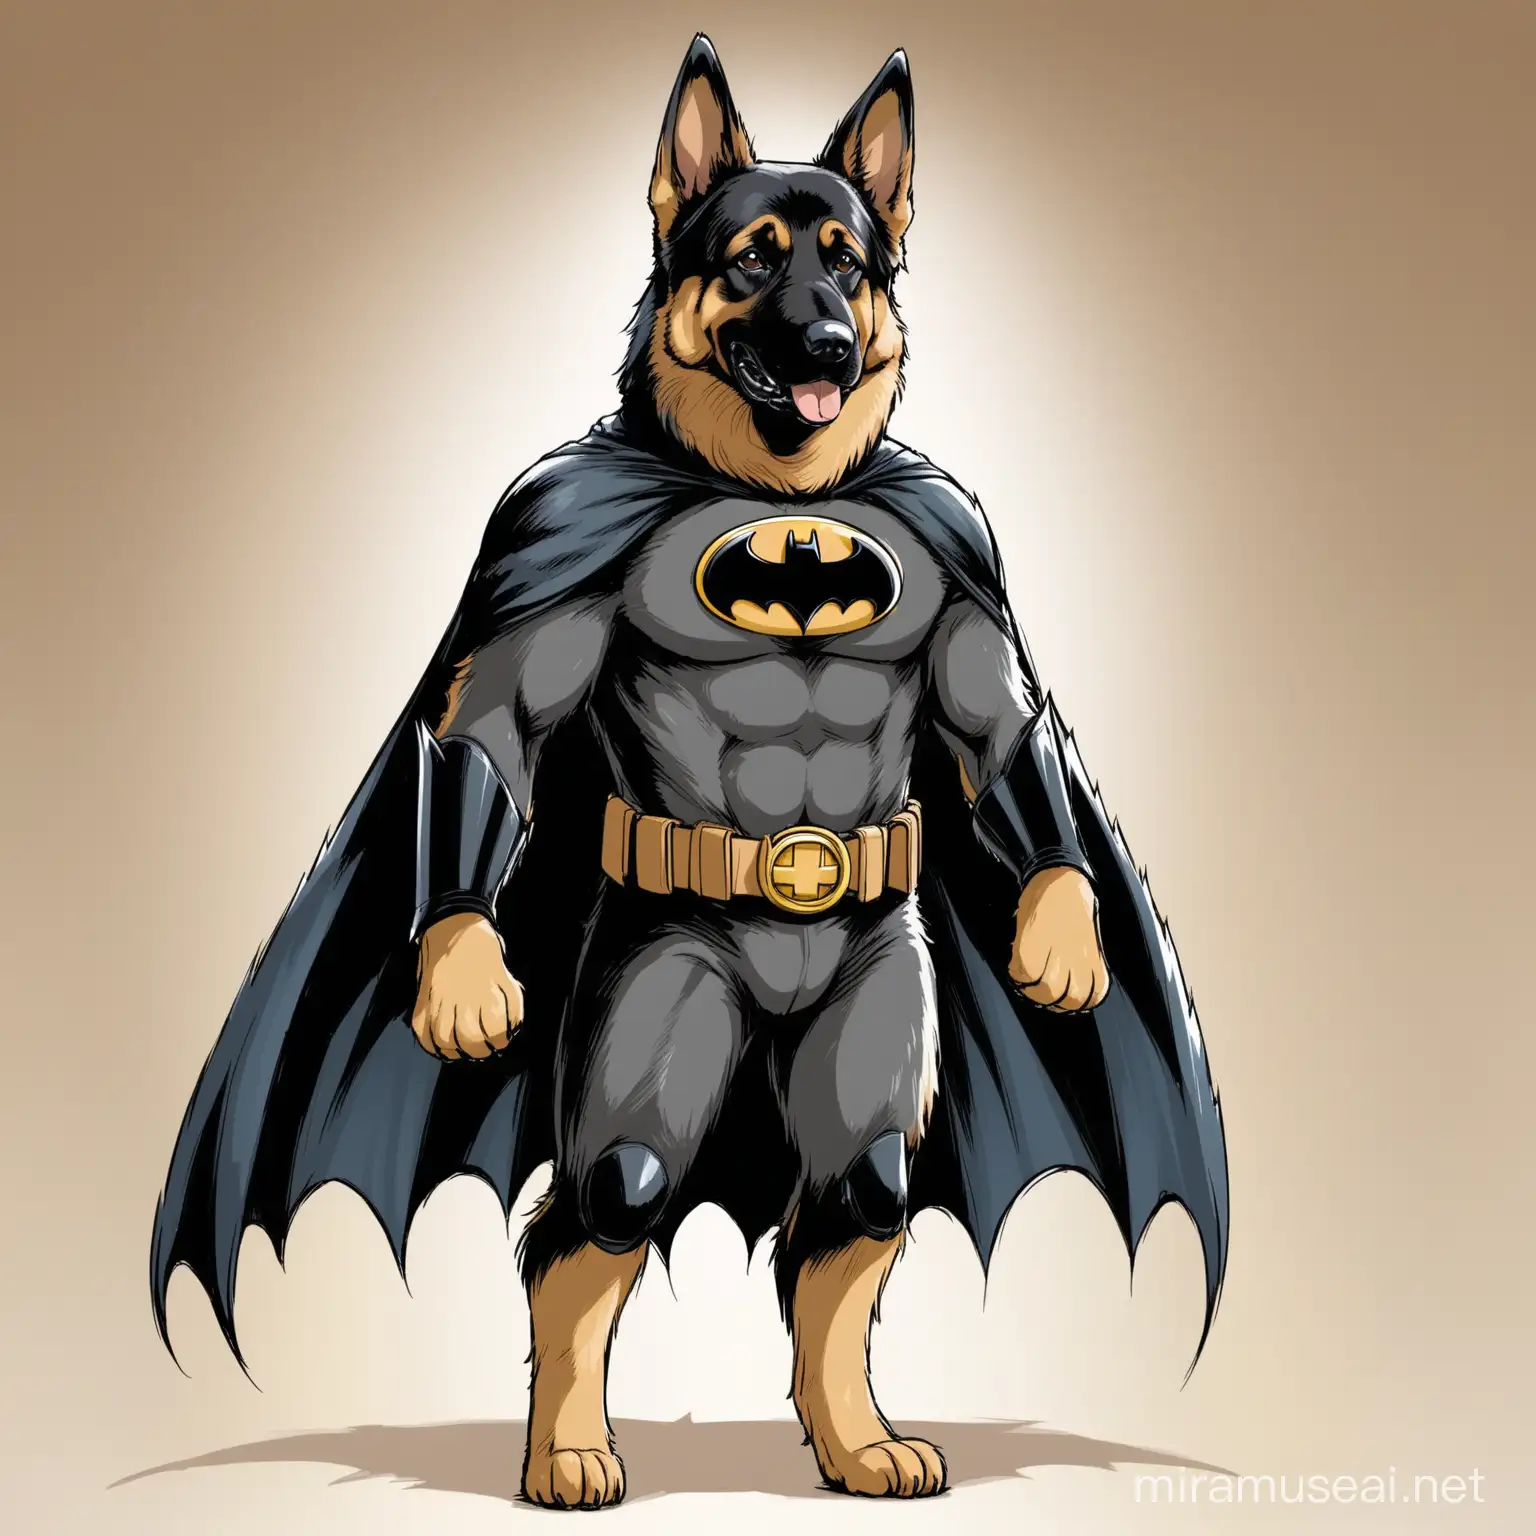 German Shepherd Dog Dressed as Batman Standing Upright